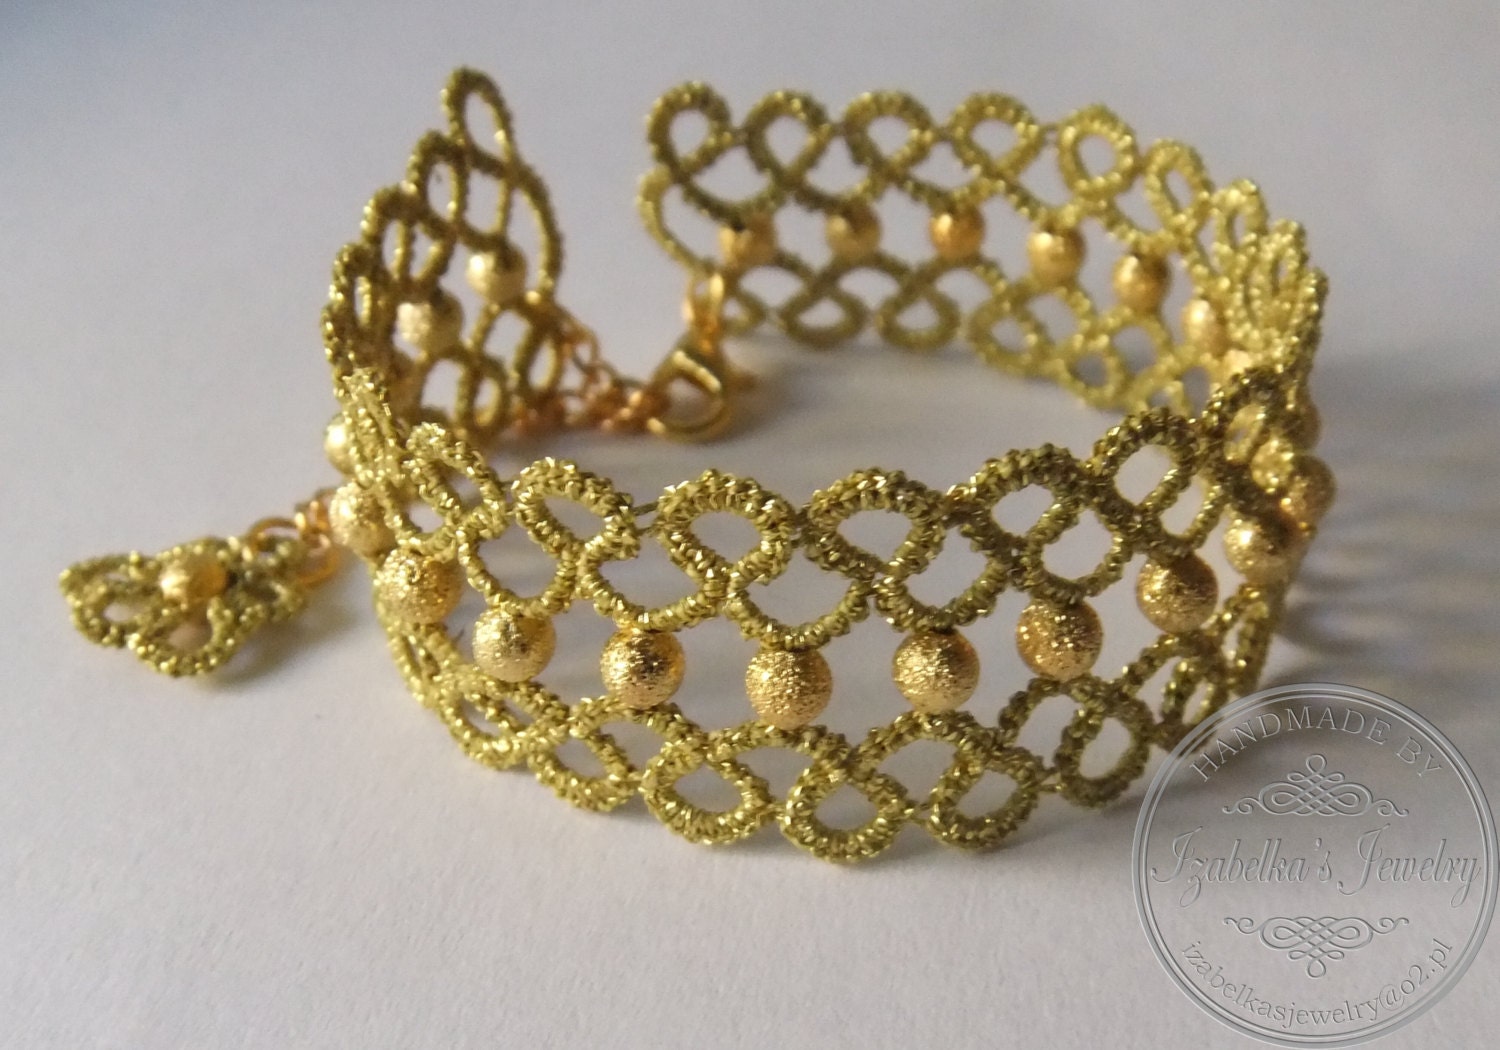 Gold lace tatted bracelet with beads - IzabelkasJewelry